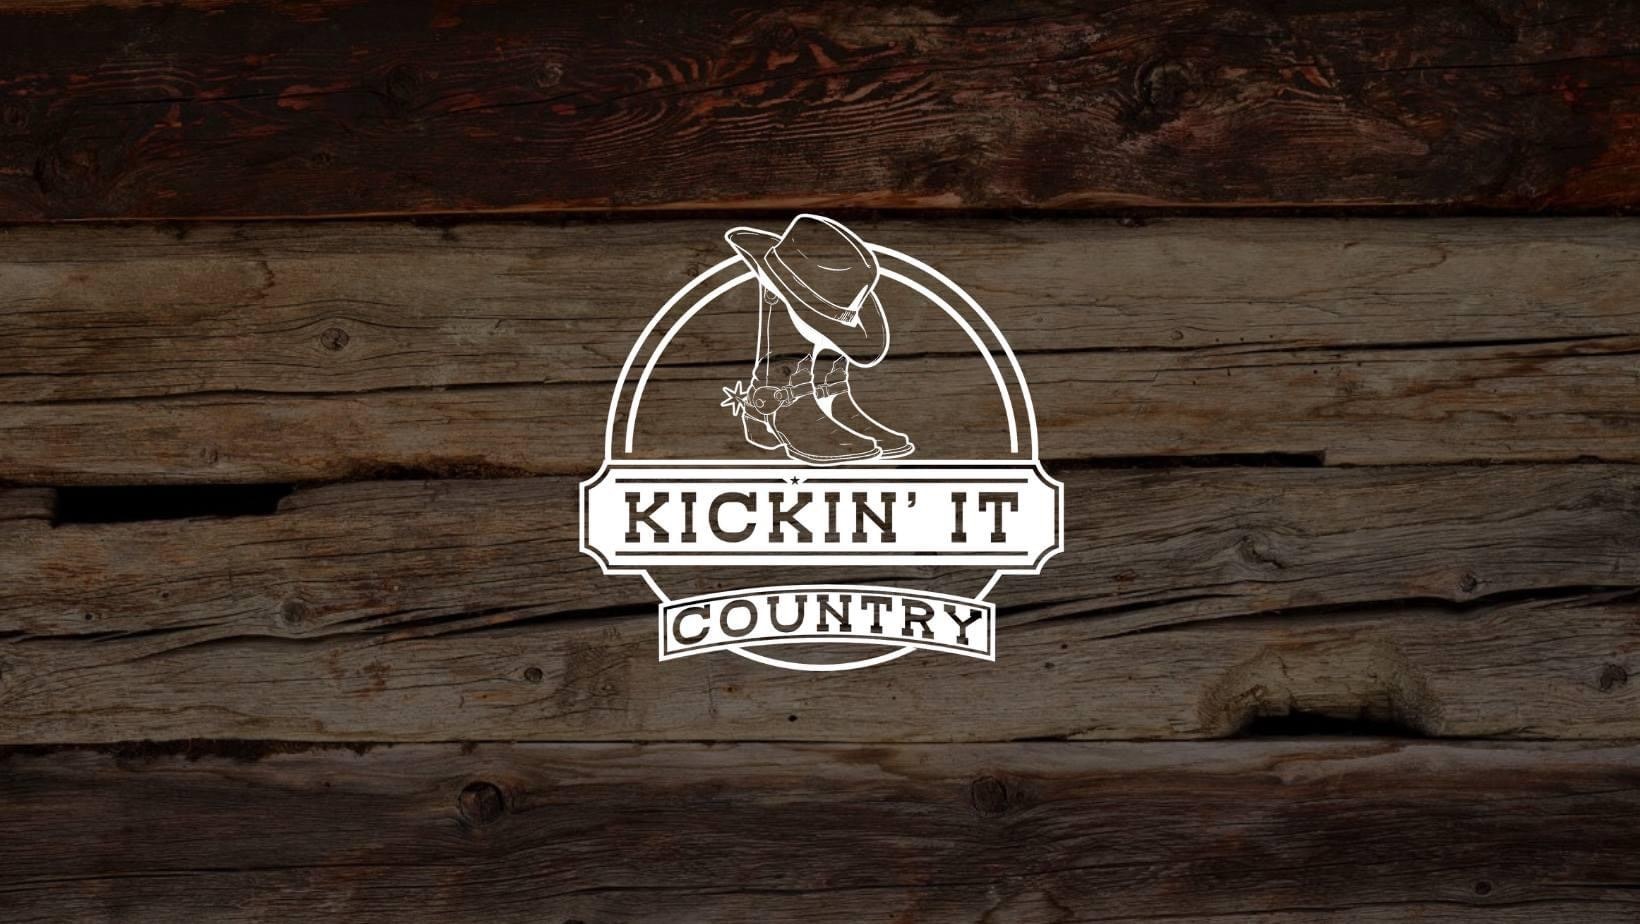 Kickin’ it Country